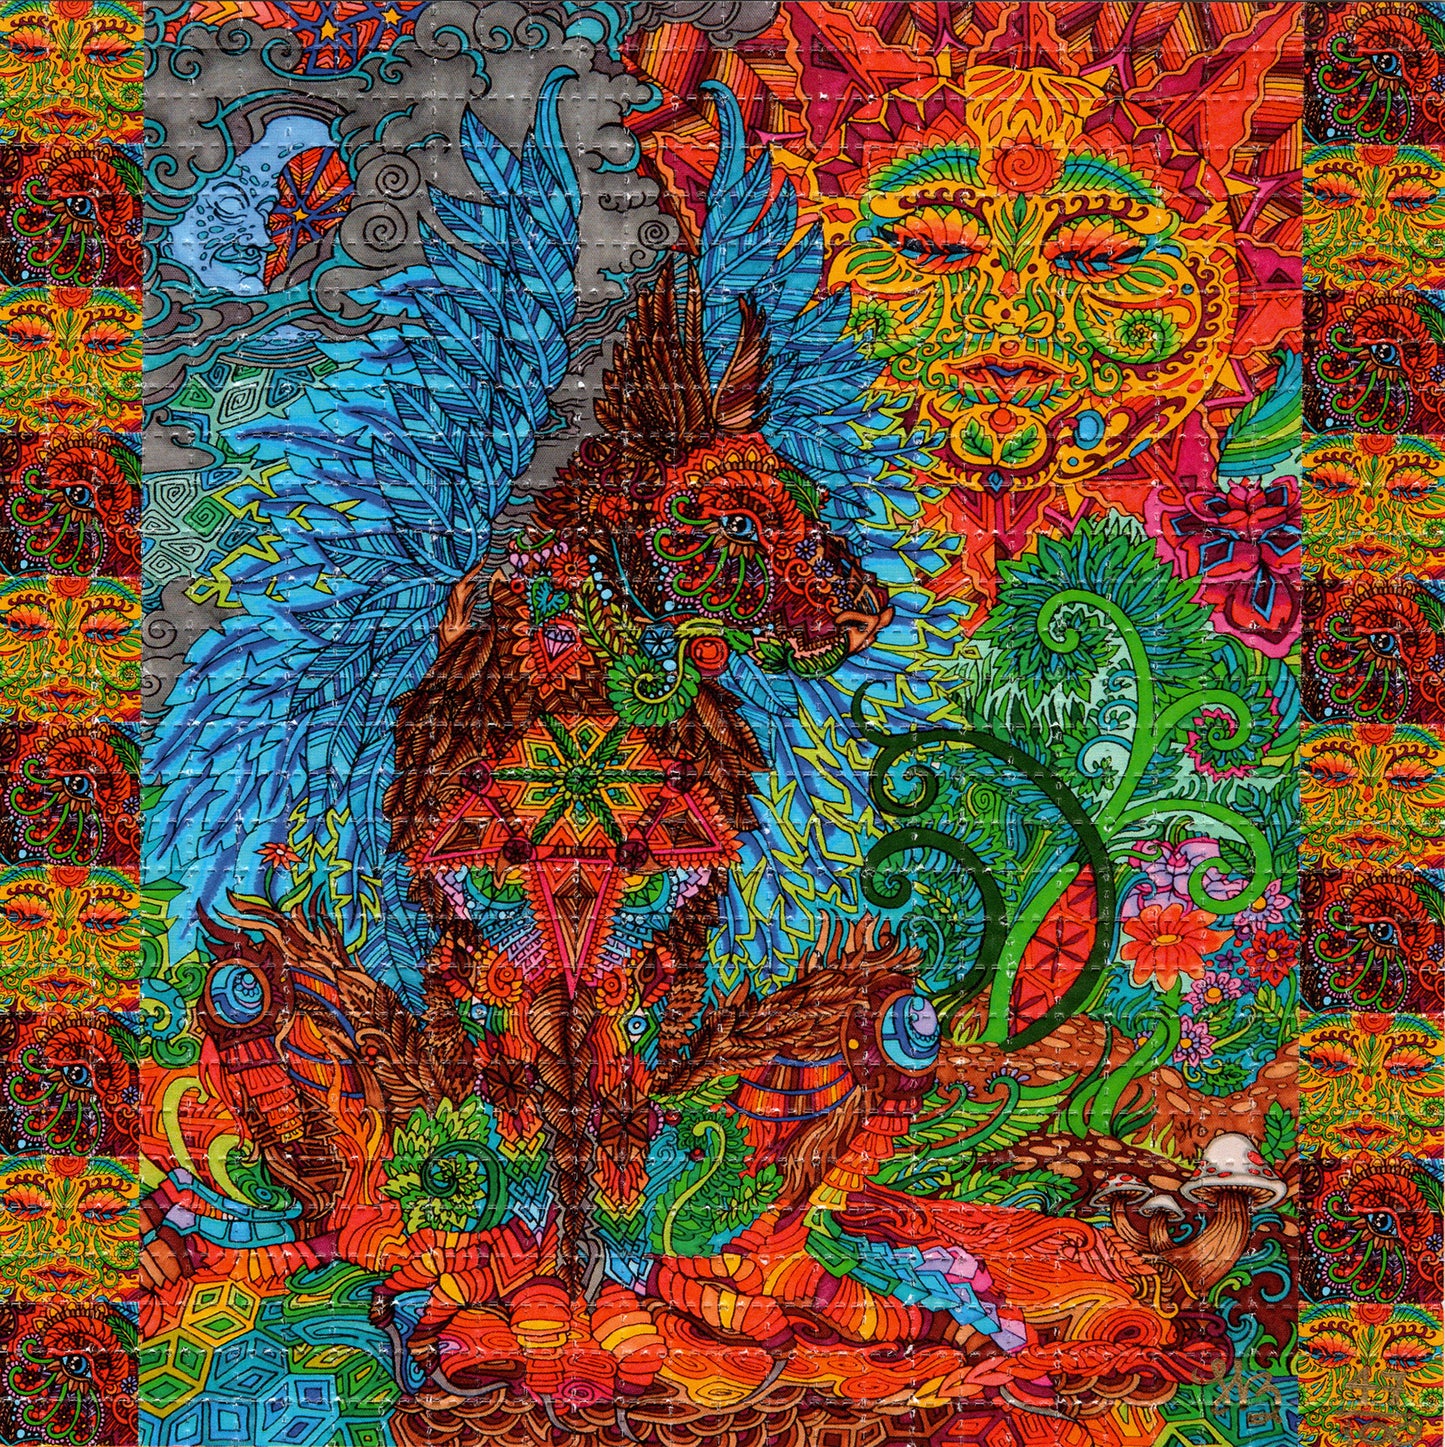 Spirit Animal Awakening by Hannah Elisabeth Buchheit Signed Limited Edition LSD blotter art print